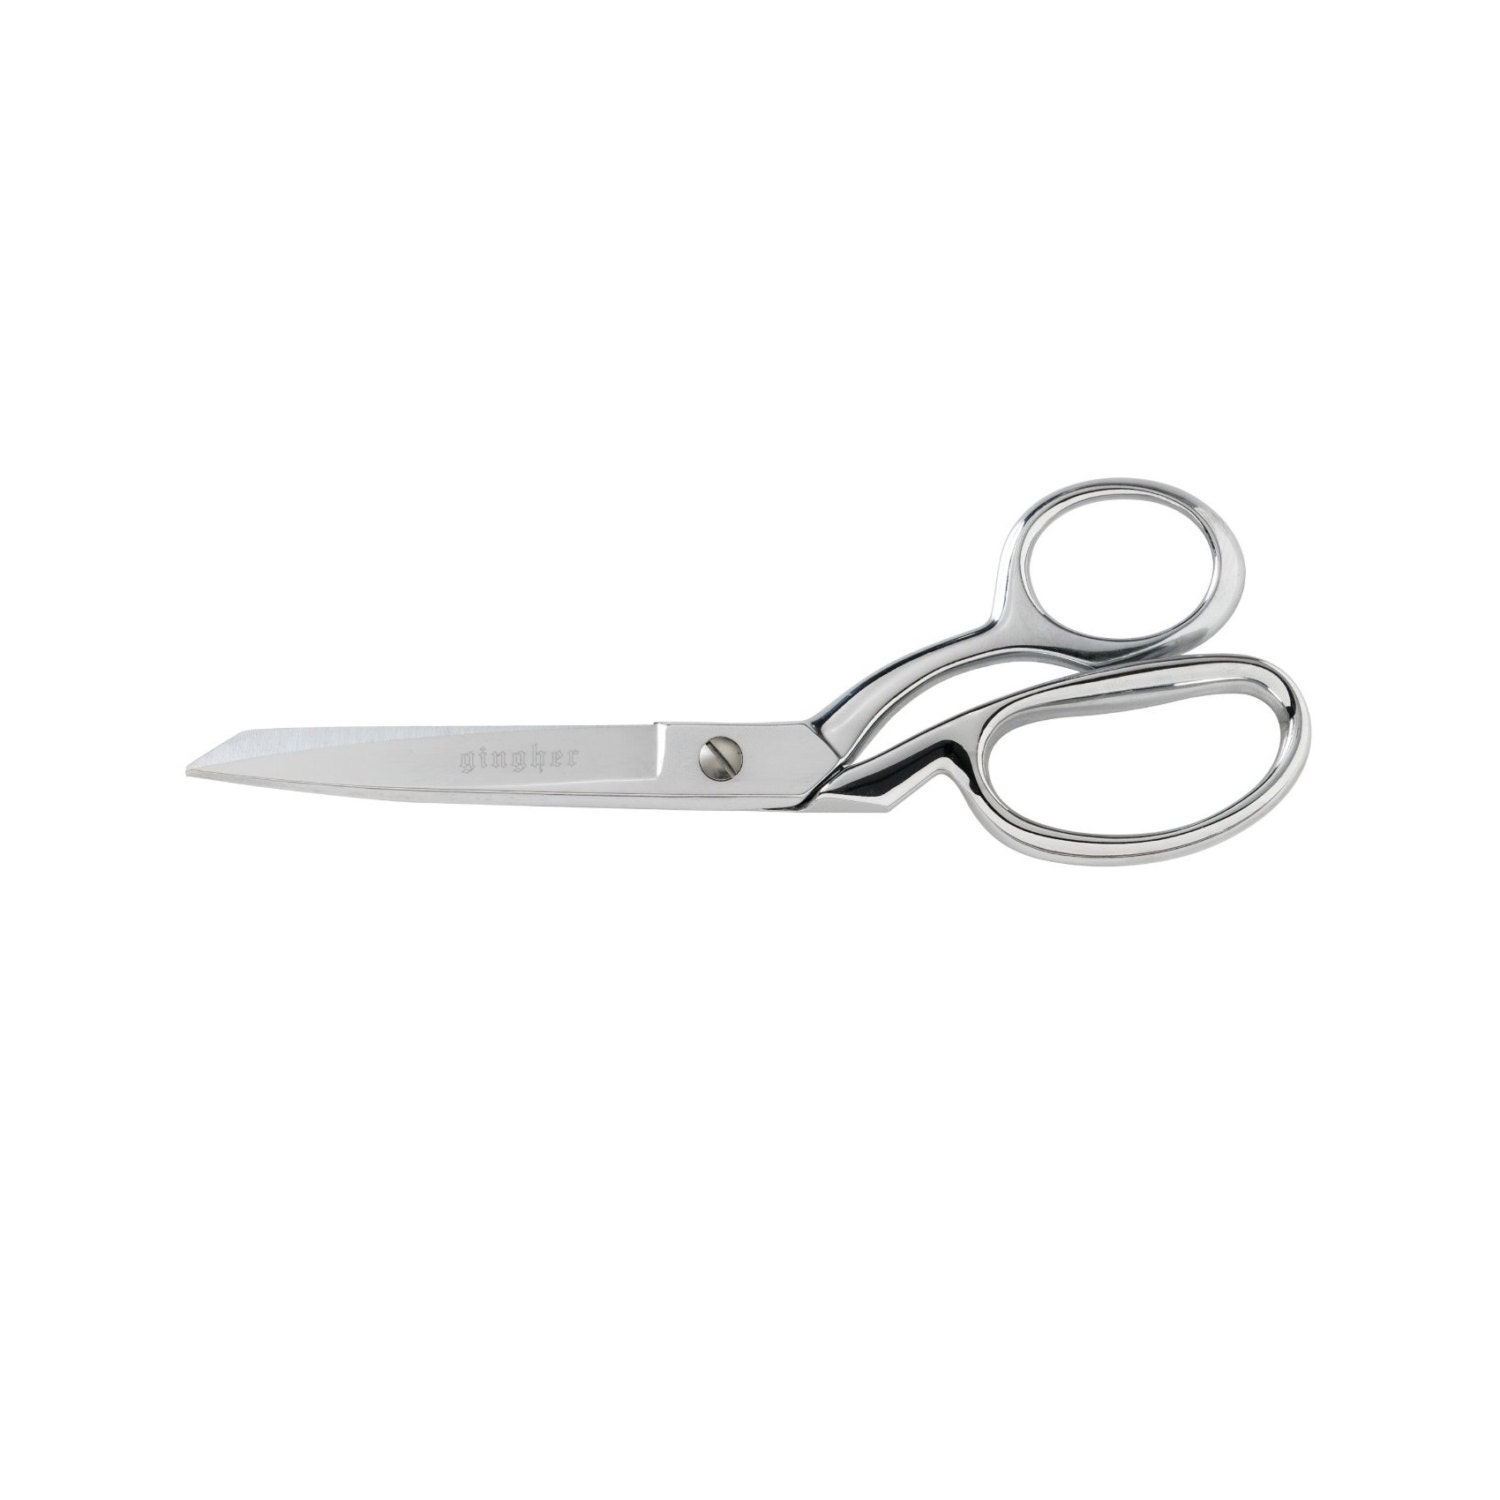 KAREN KAY BUCKLEY Medium 6 Softgrip Micro-serrated Edge Perfect Scissors  2-pc. Set at Thecottageneedle.com Fabric Sewing Cross Stitch Tool 